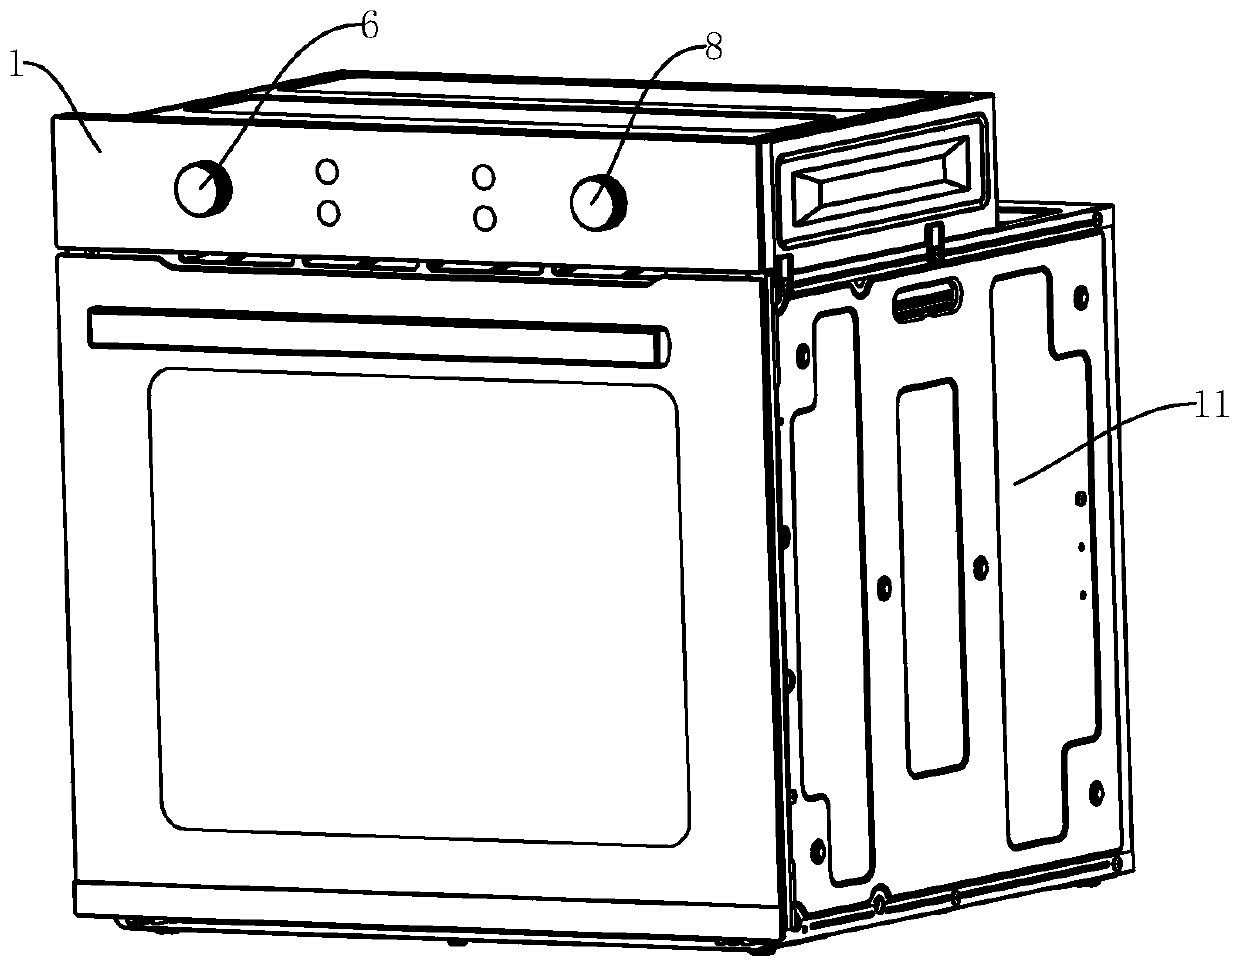 Circuit control type oven